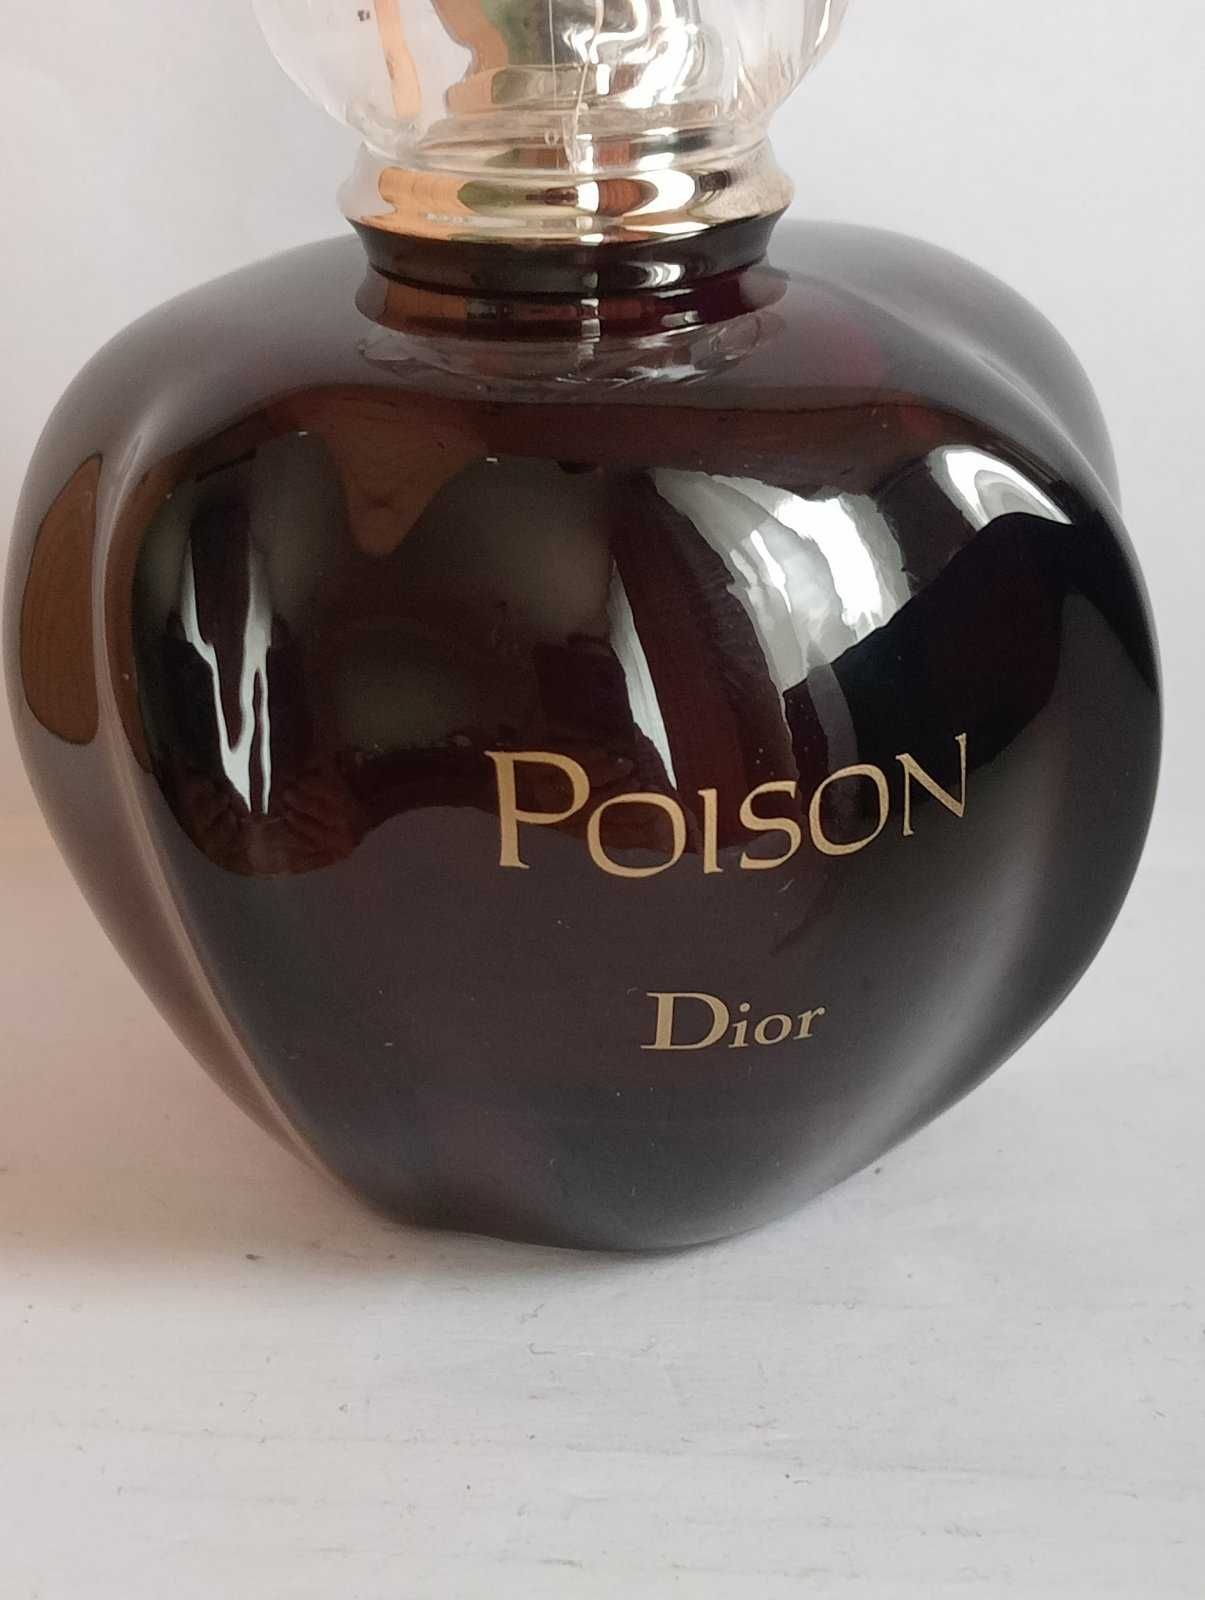 Dior Poison
Туалетна вода 50 мл